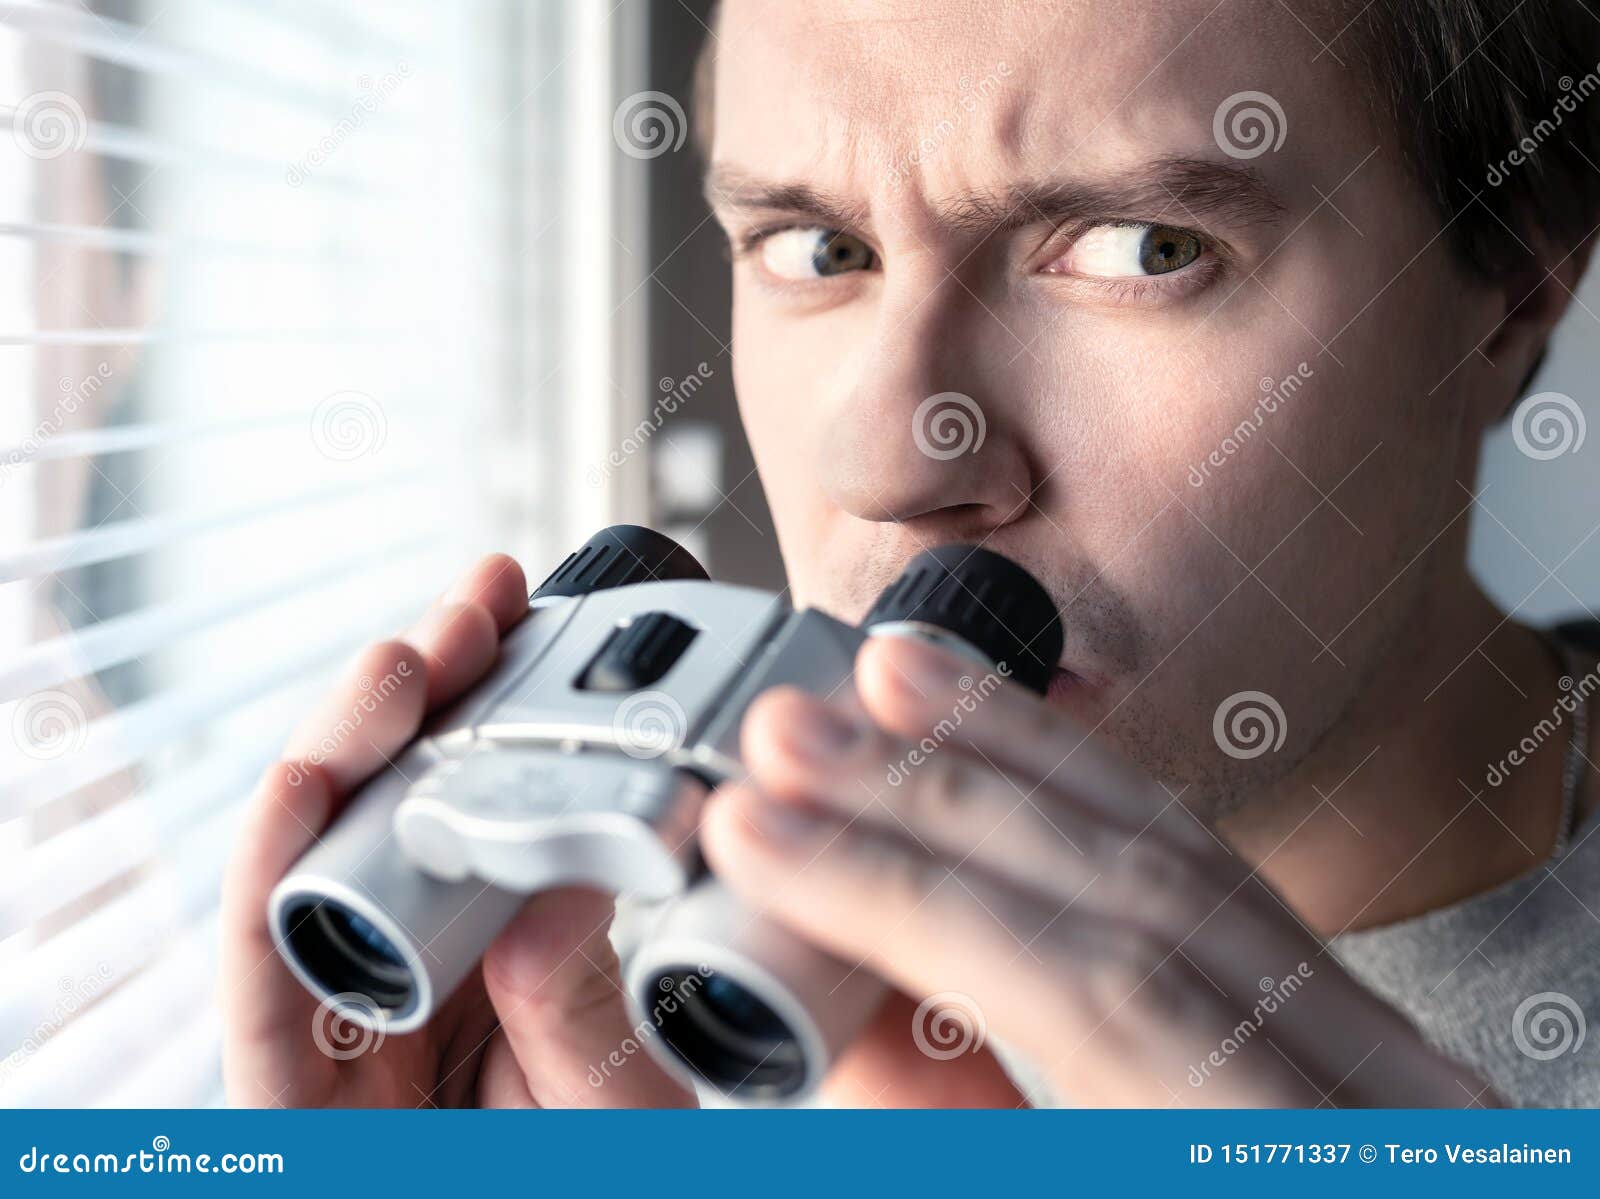 suspicious, skeptic and confused man with binoculars. conspiracy theory, paranoia, skepticism or suspicion concept.